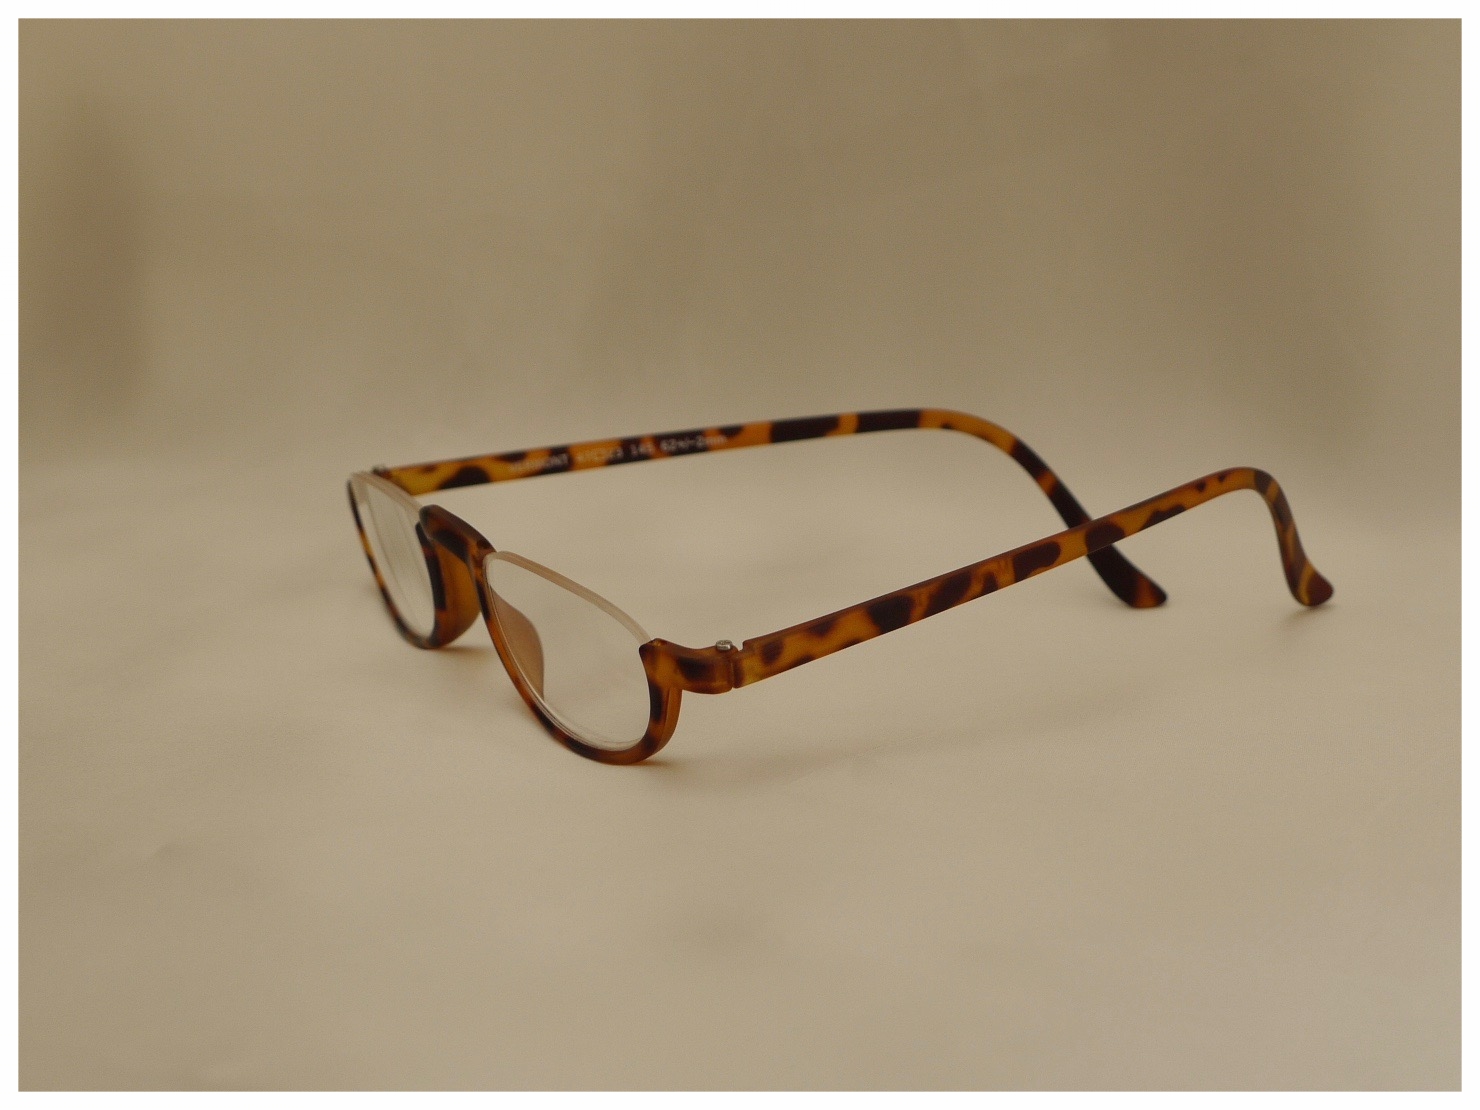 Daniel Cullen Eyewear—Vermont Half-Eye Spectacles